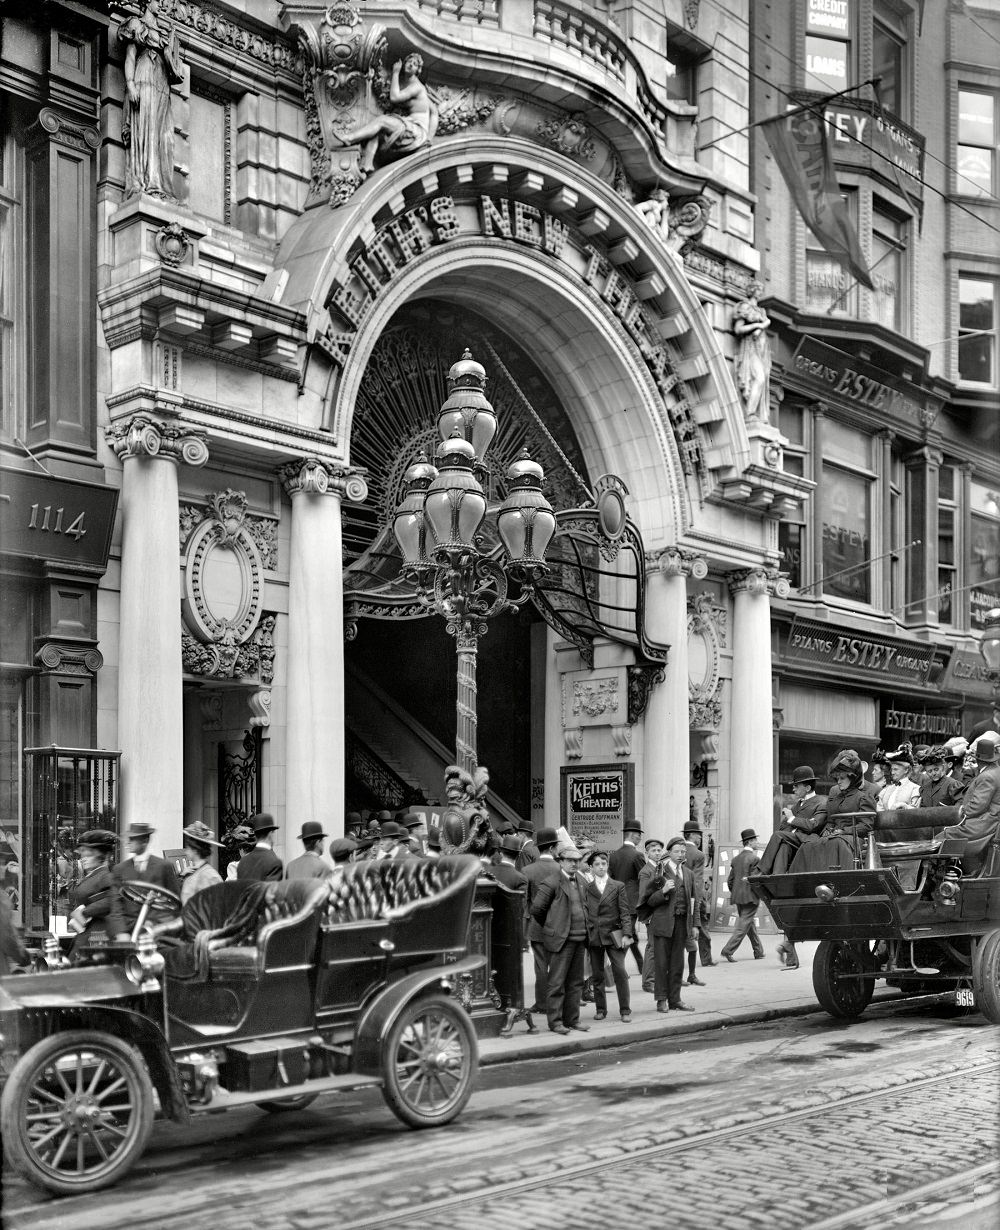 Entrance to Keith's Theatre, Philadelphia, 1907